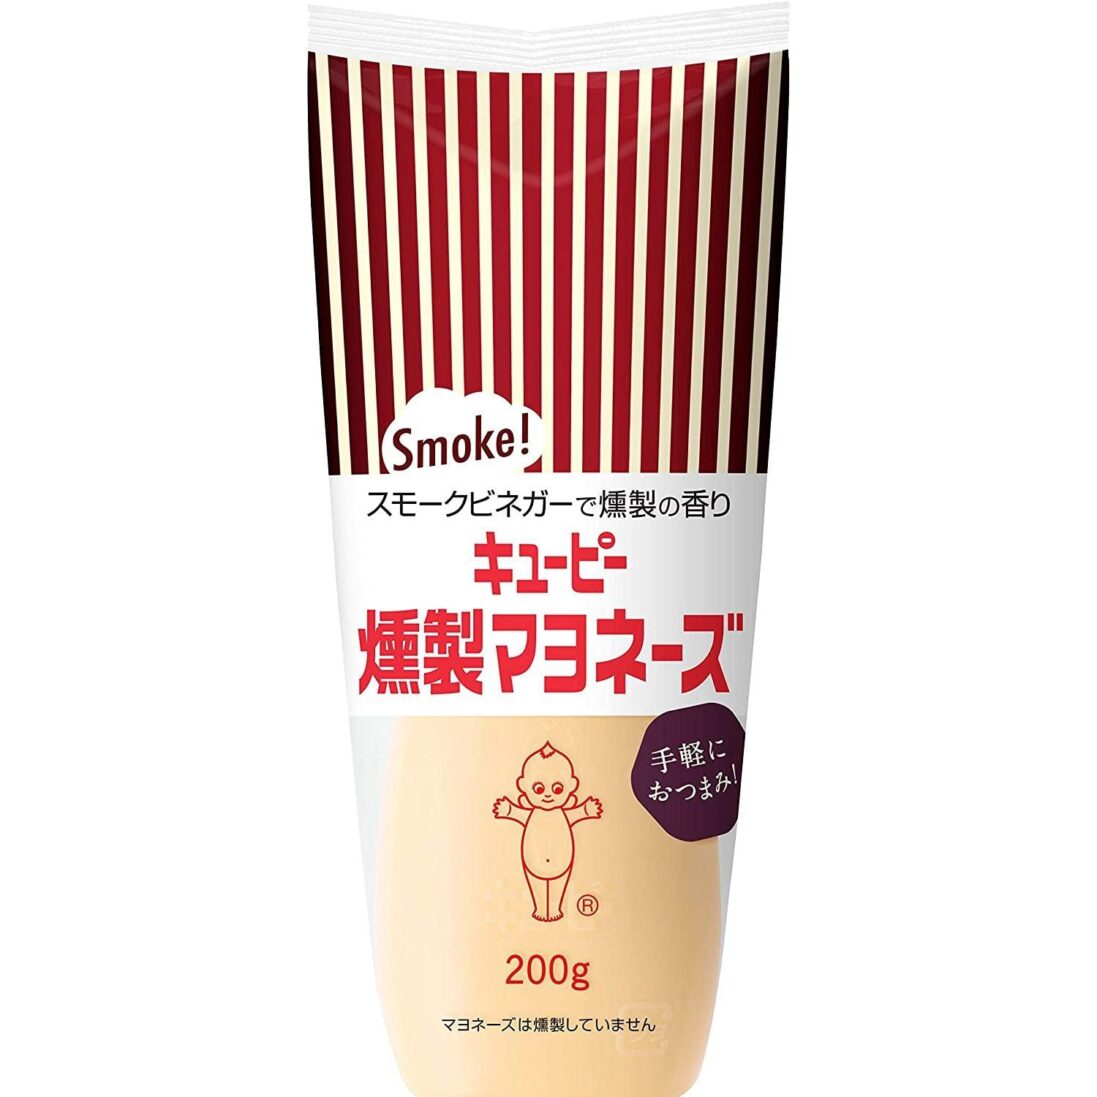 Kewpie-Smoked-Mayo-Smoked-Japanese-Mayonnaise-200g-Japanese-Taste_2048x.jpg